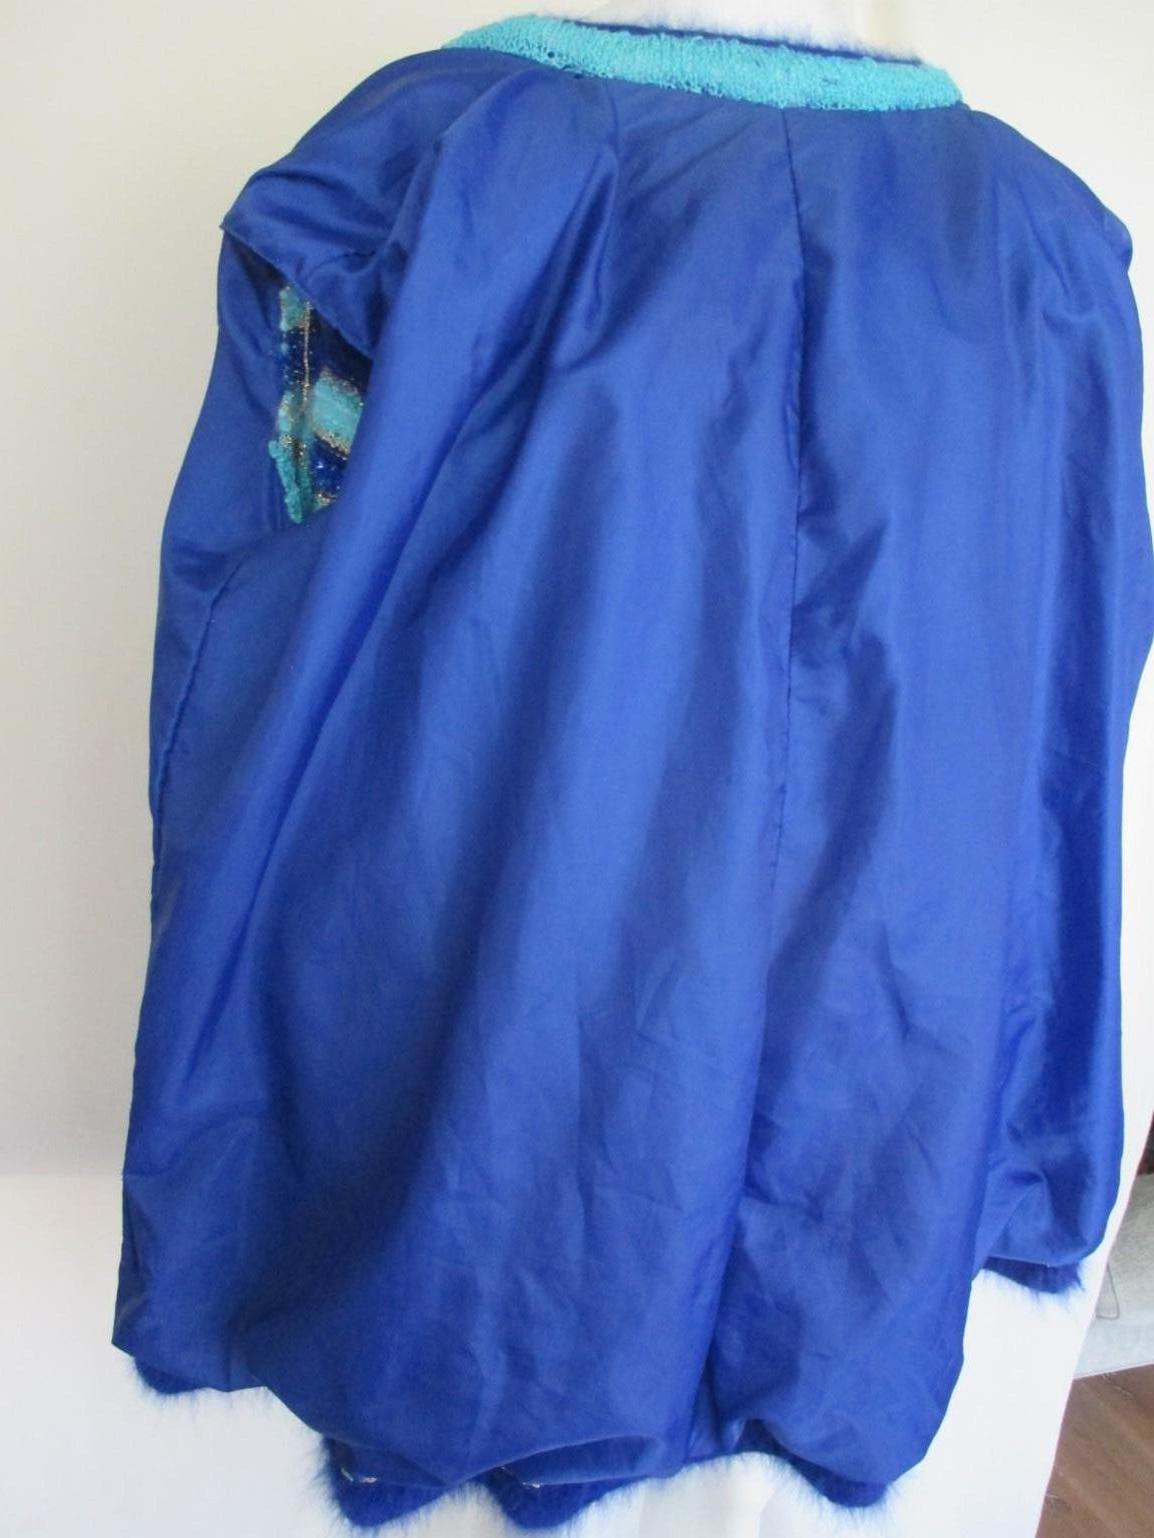 Turquoise coat with flower appliqués 3